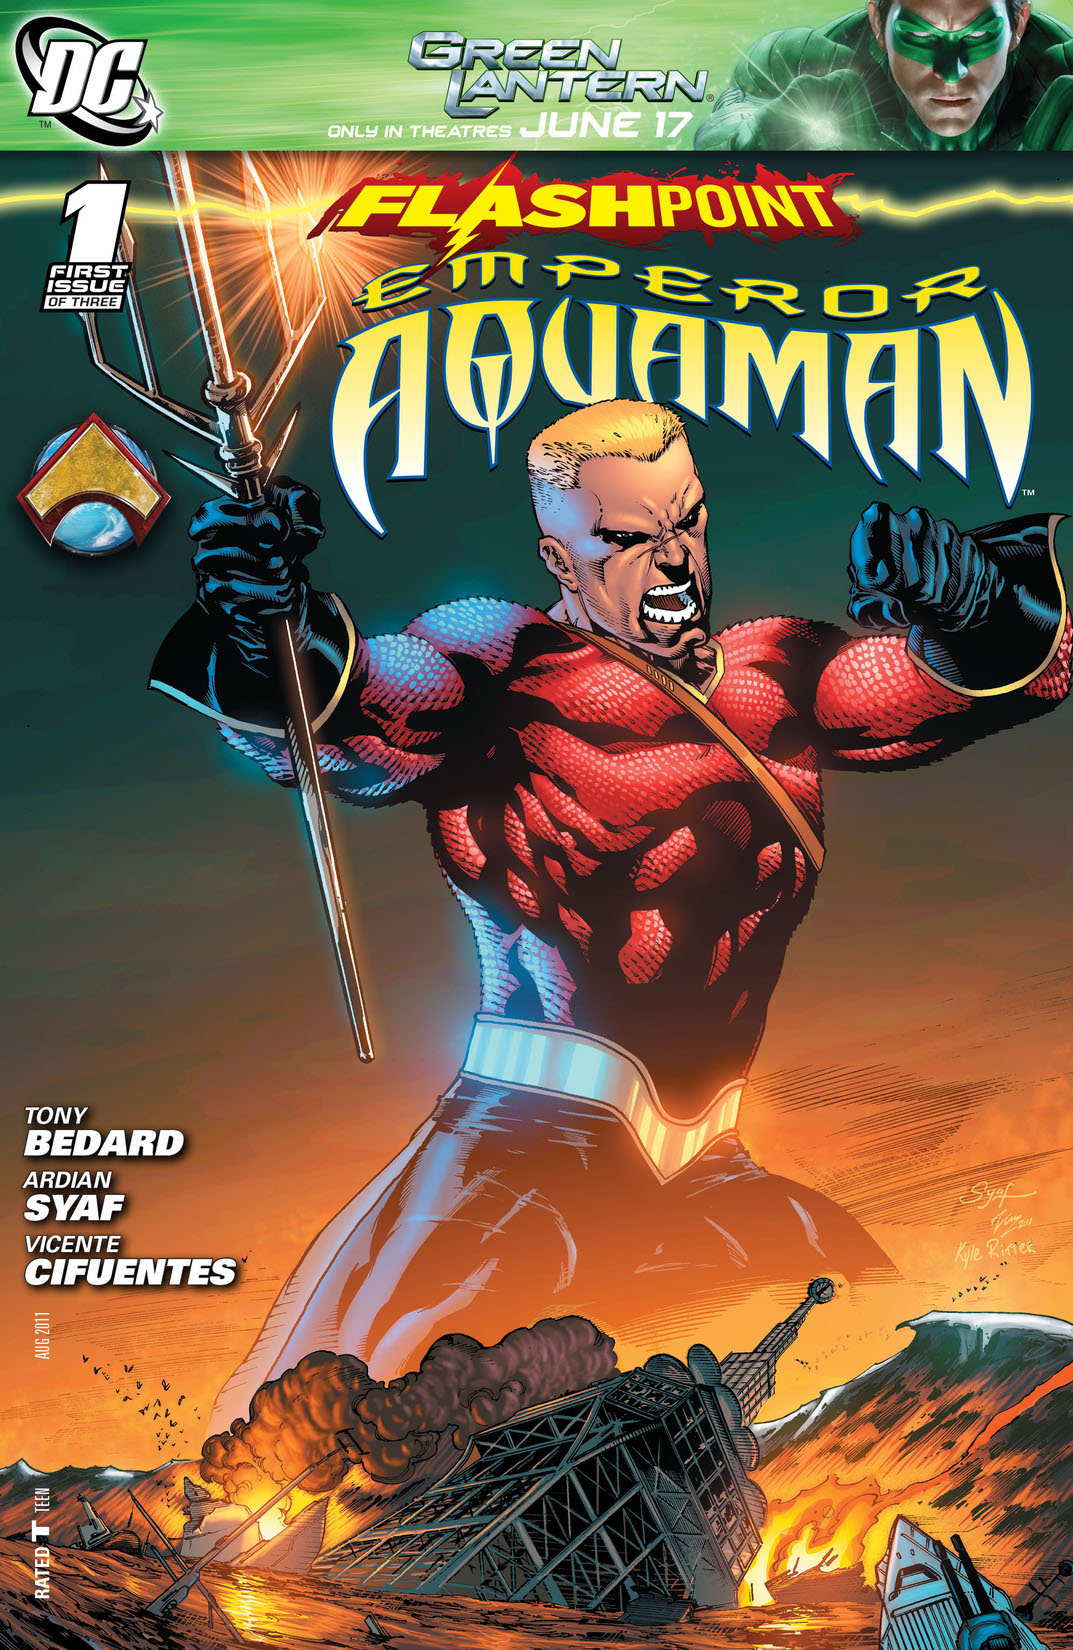 Flashpoint: Emperor Aquaman #1 preview images